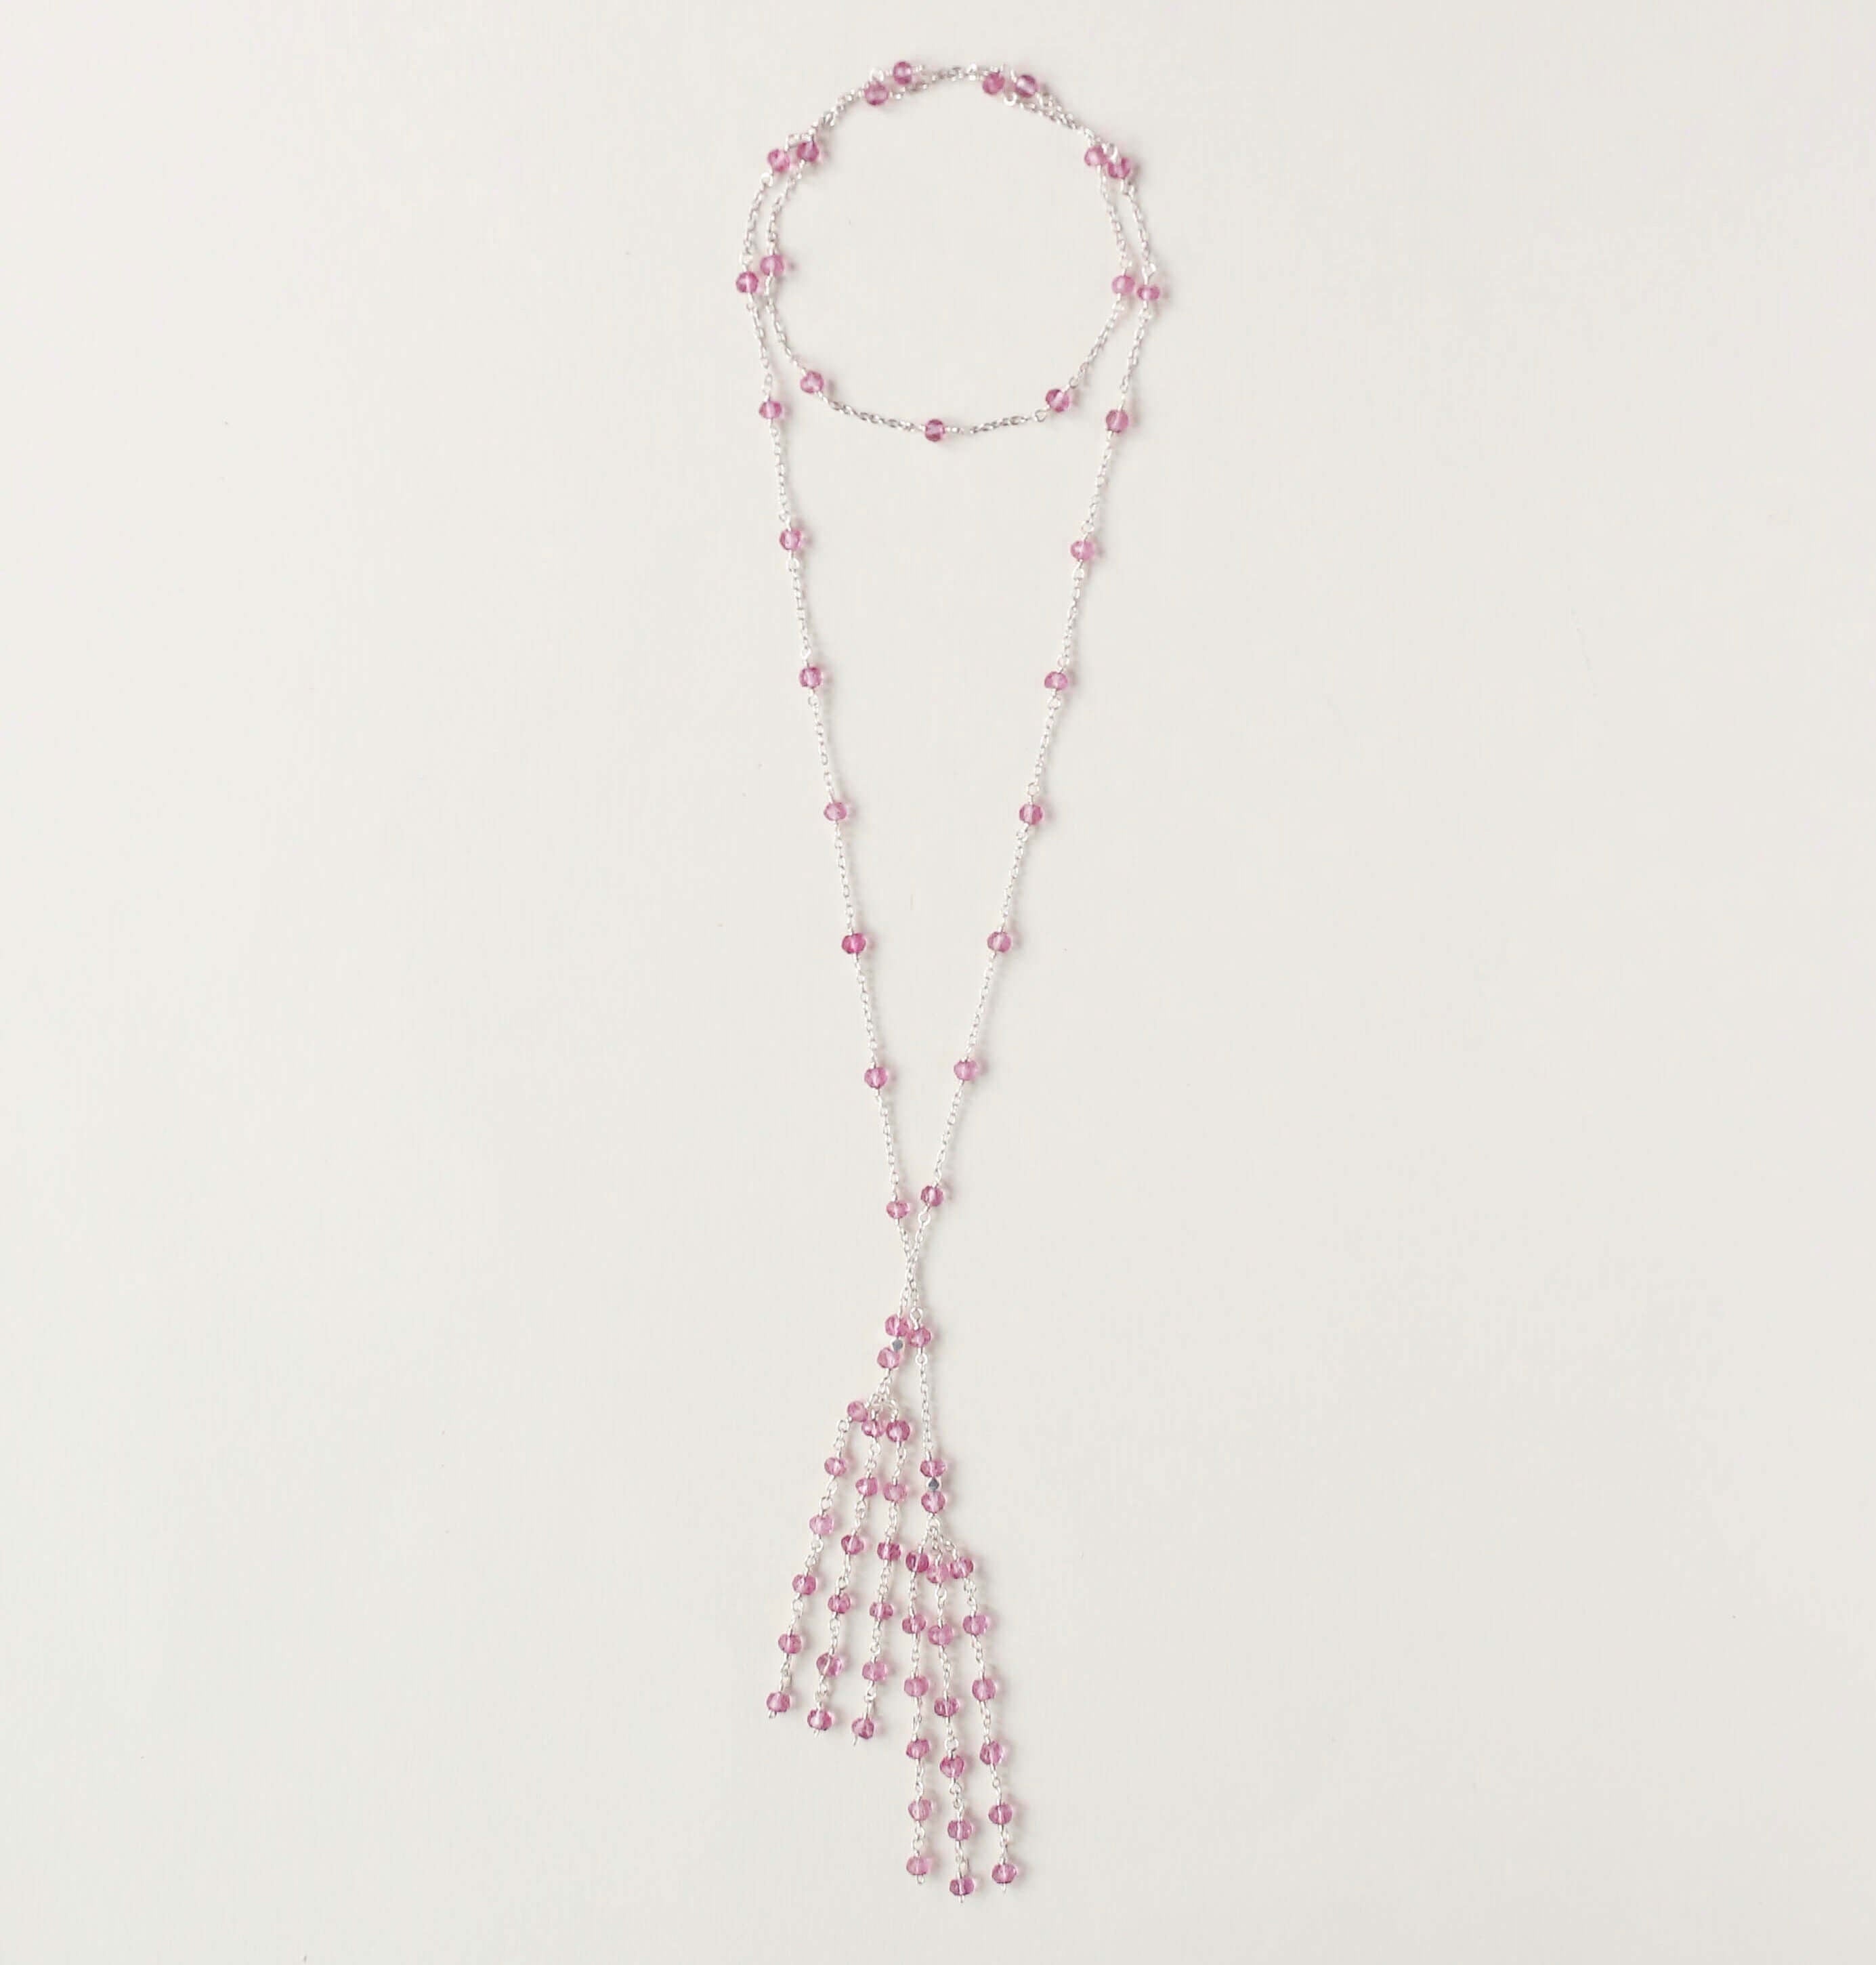 Rhodium Plated Pink Tourmaline Quartz Lariat Necklace with a stunning tassel